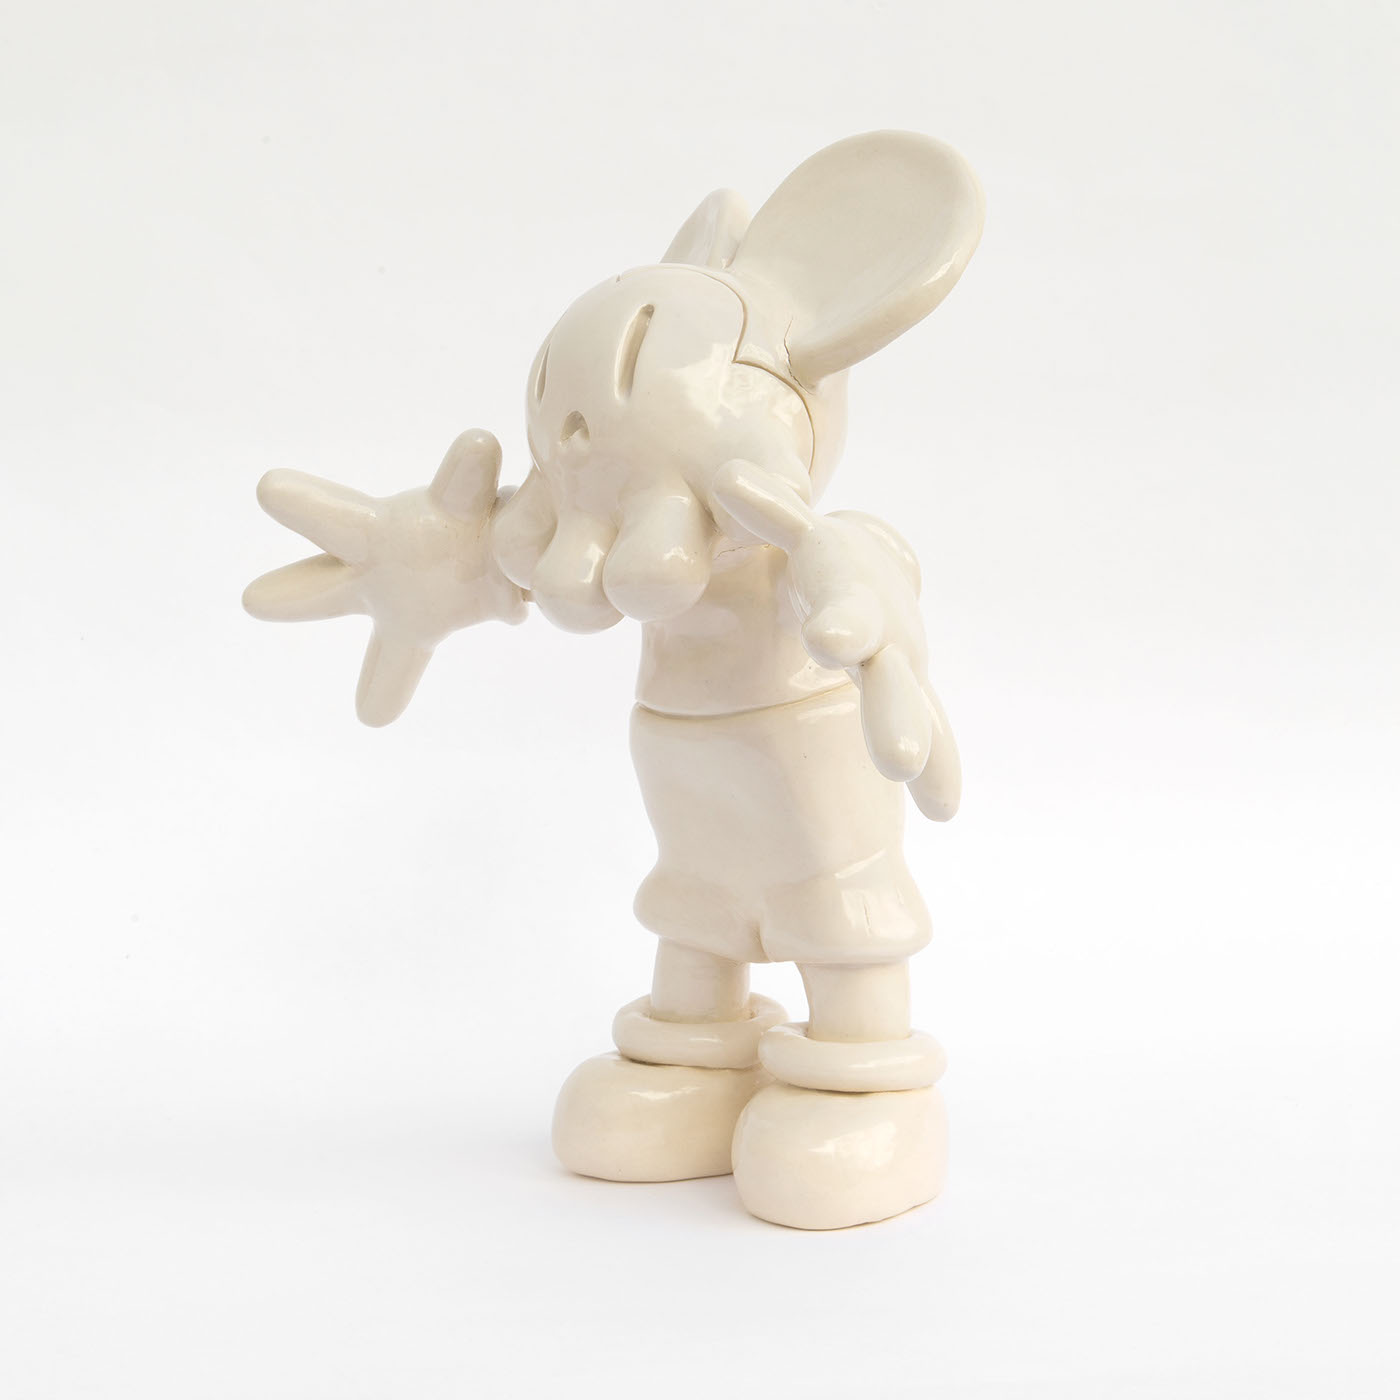 creepymouse mickeymouse disney arttoy toy sculpture